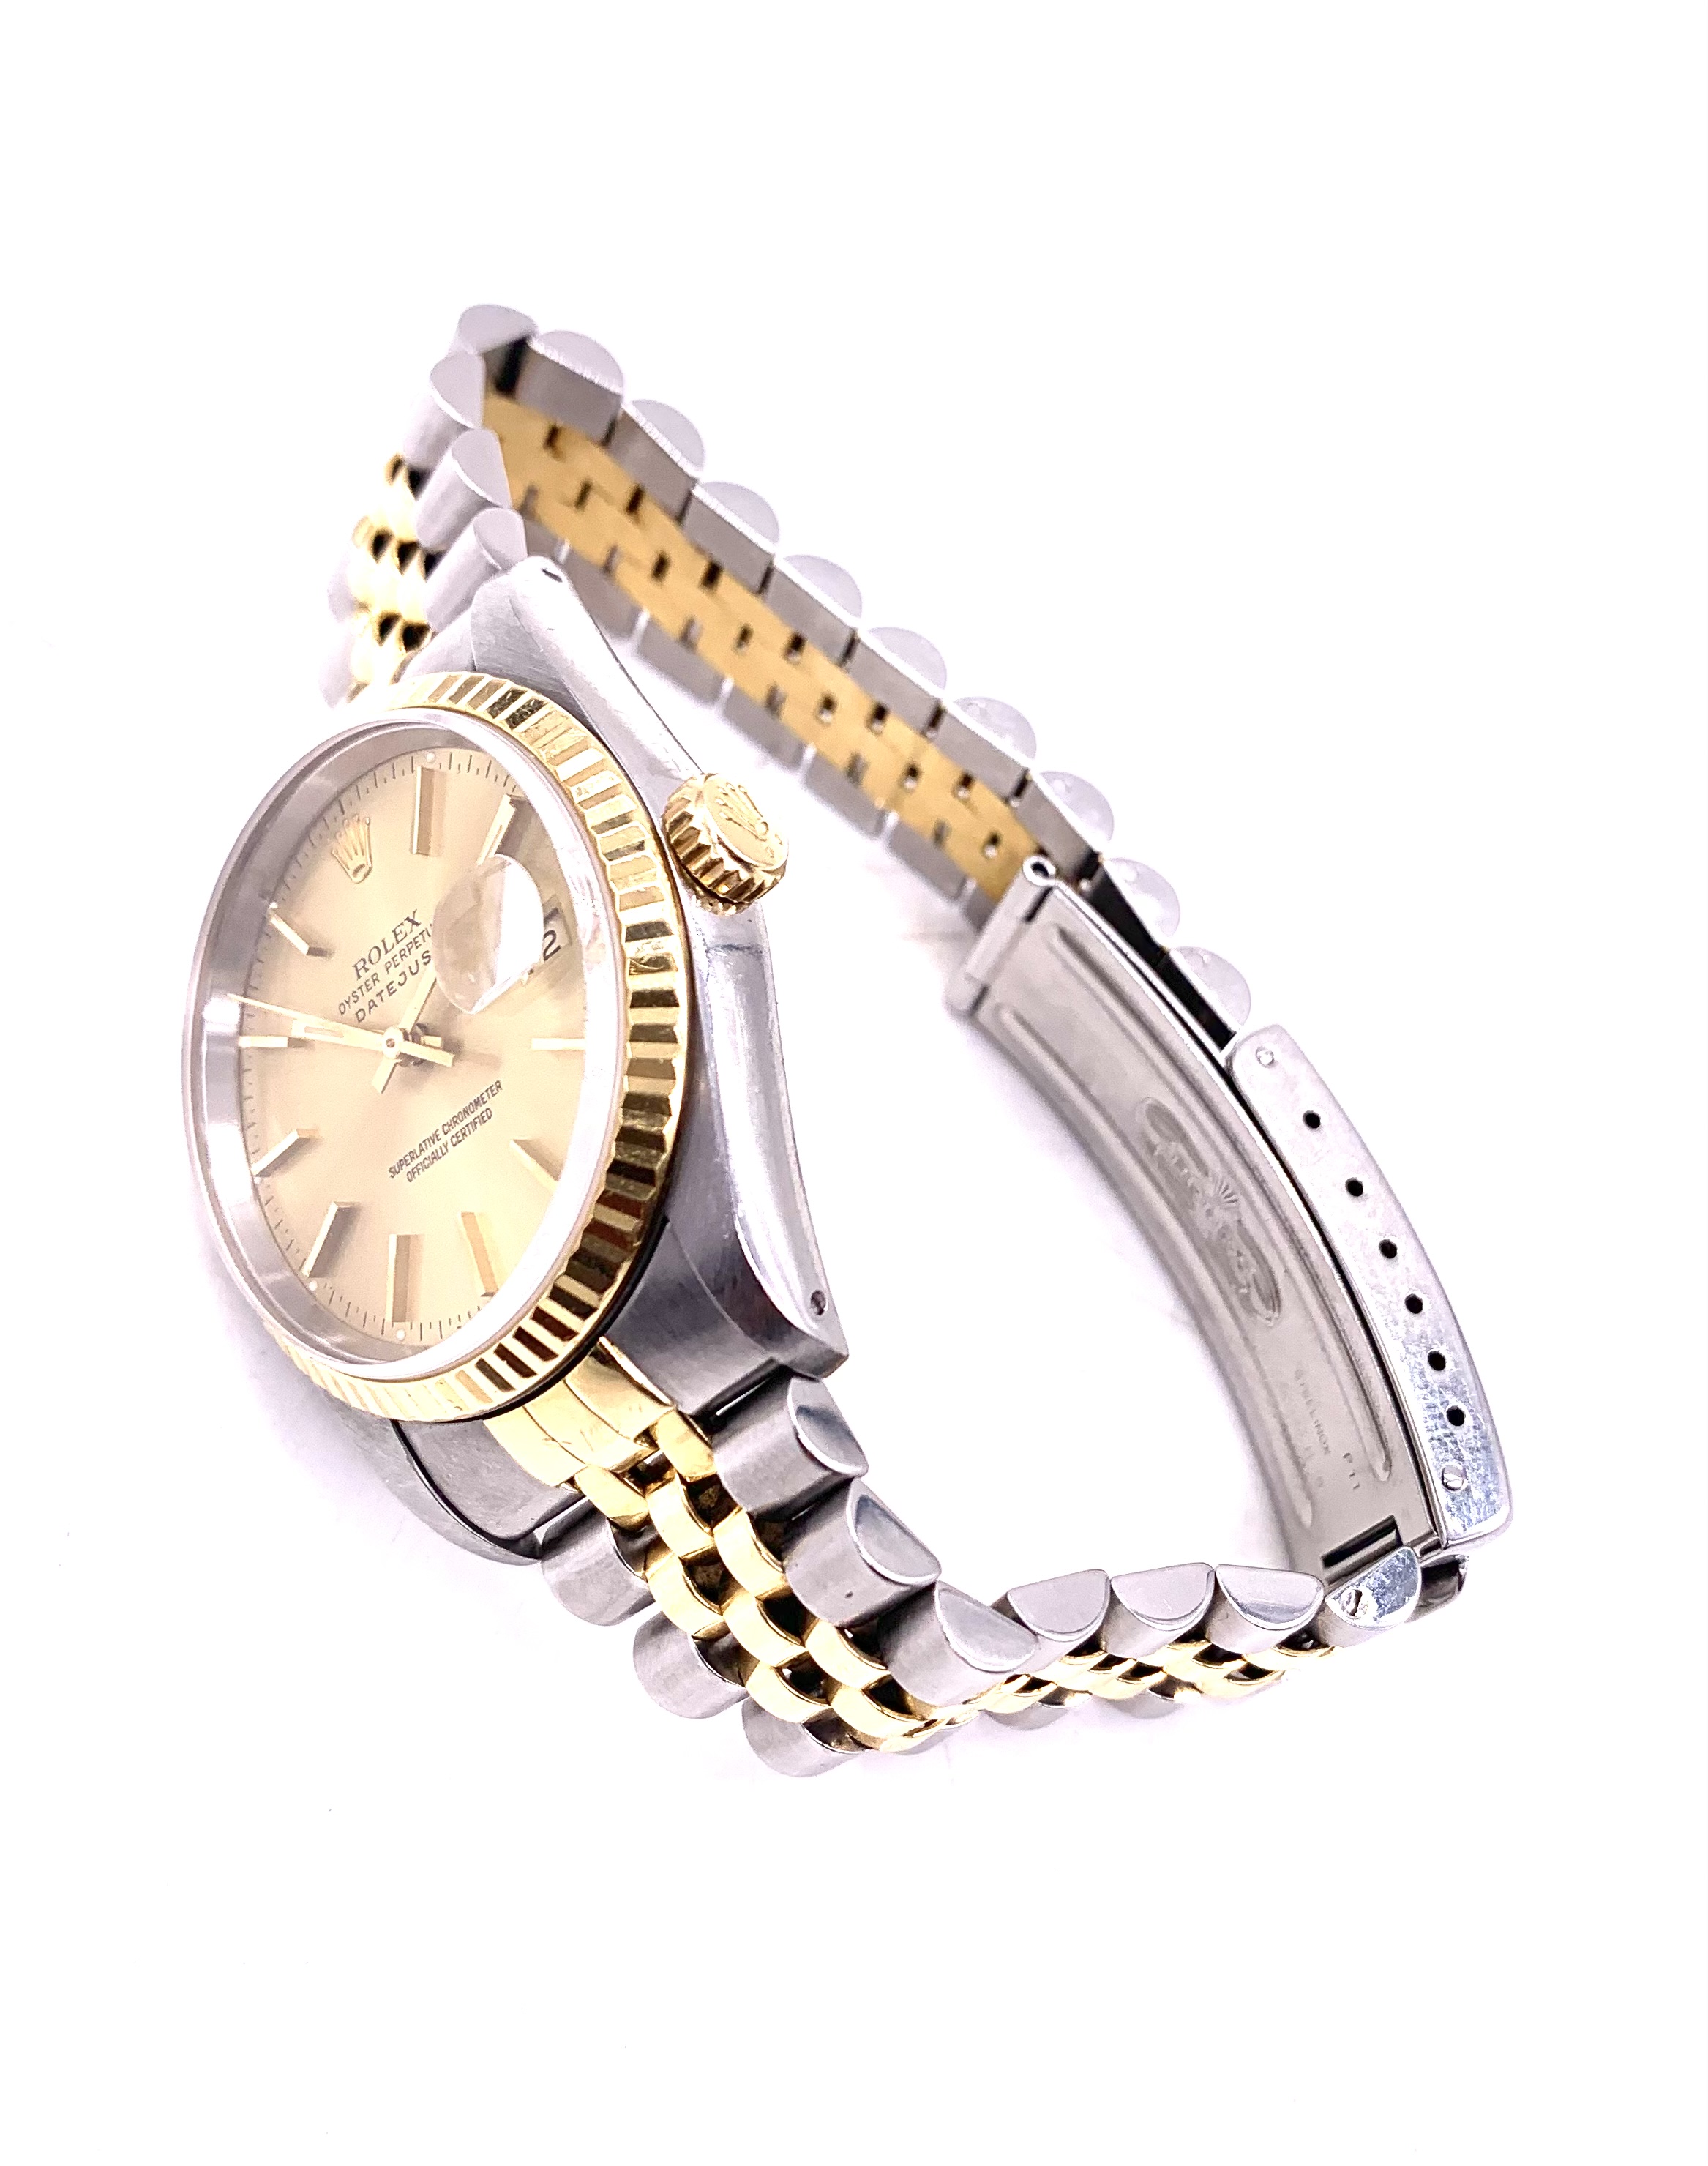 Reloj Rolex